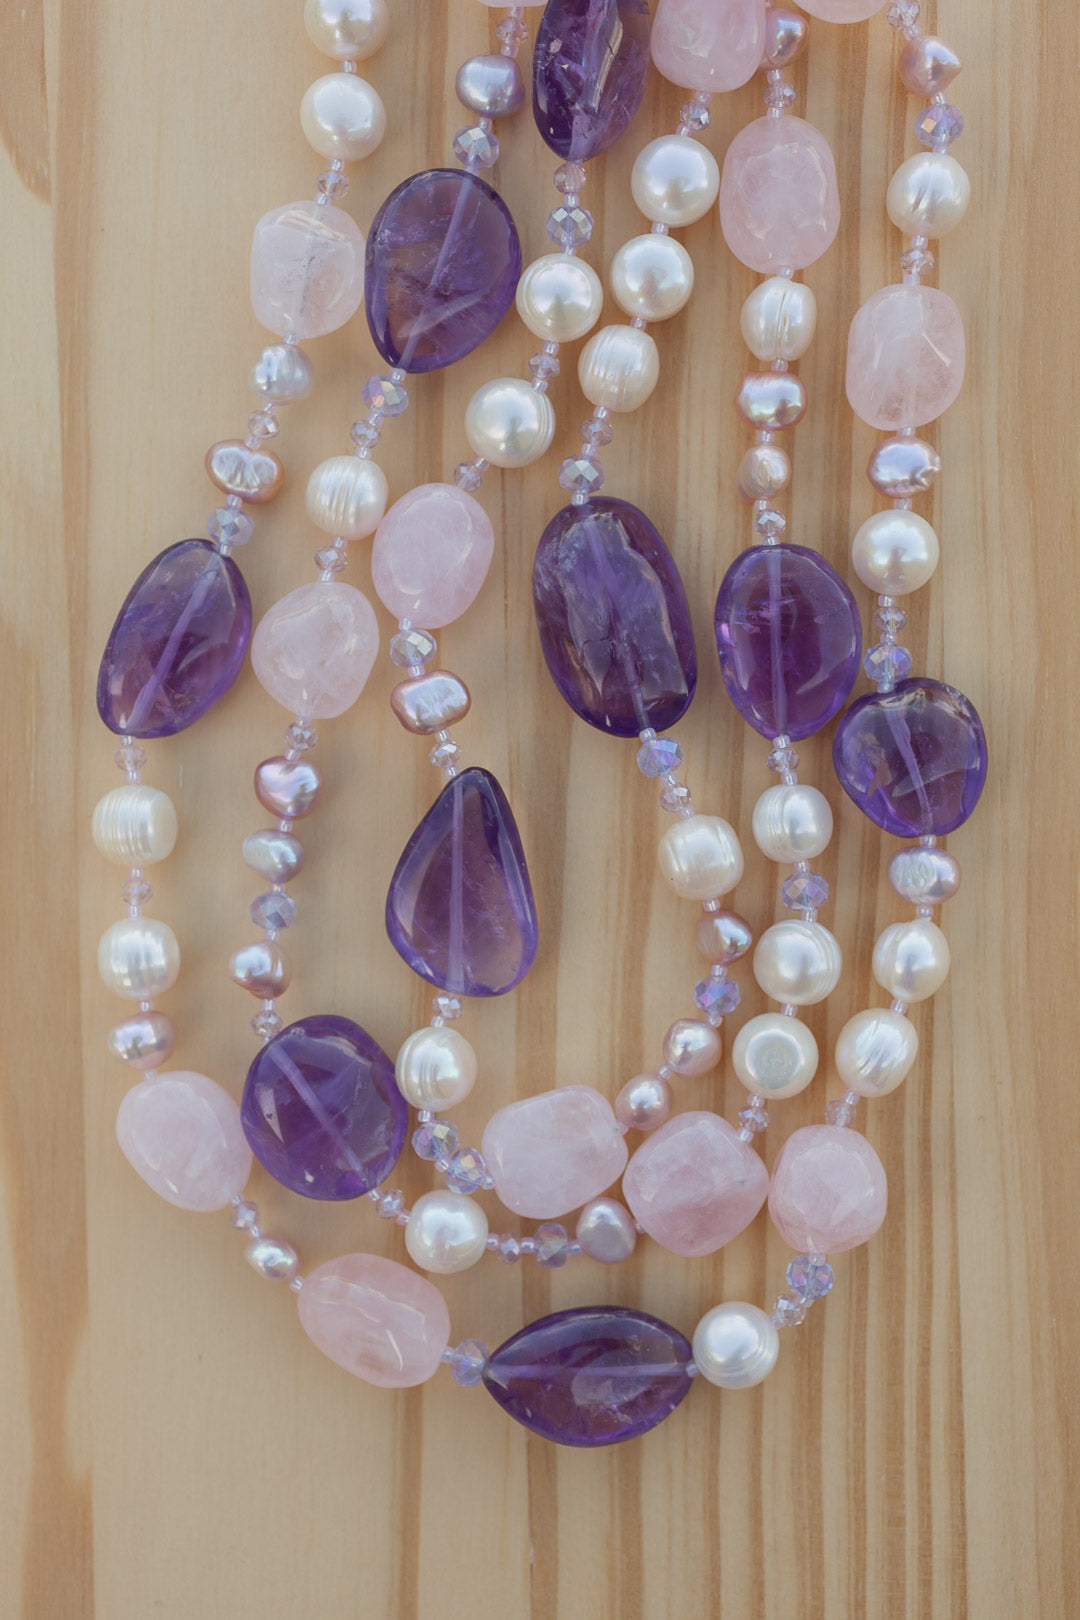 55" Extra Long Amethyst, Rose Quartz, Pearl & Crystal Beaded Necklace